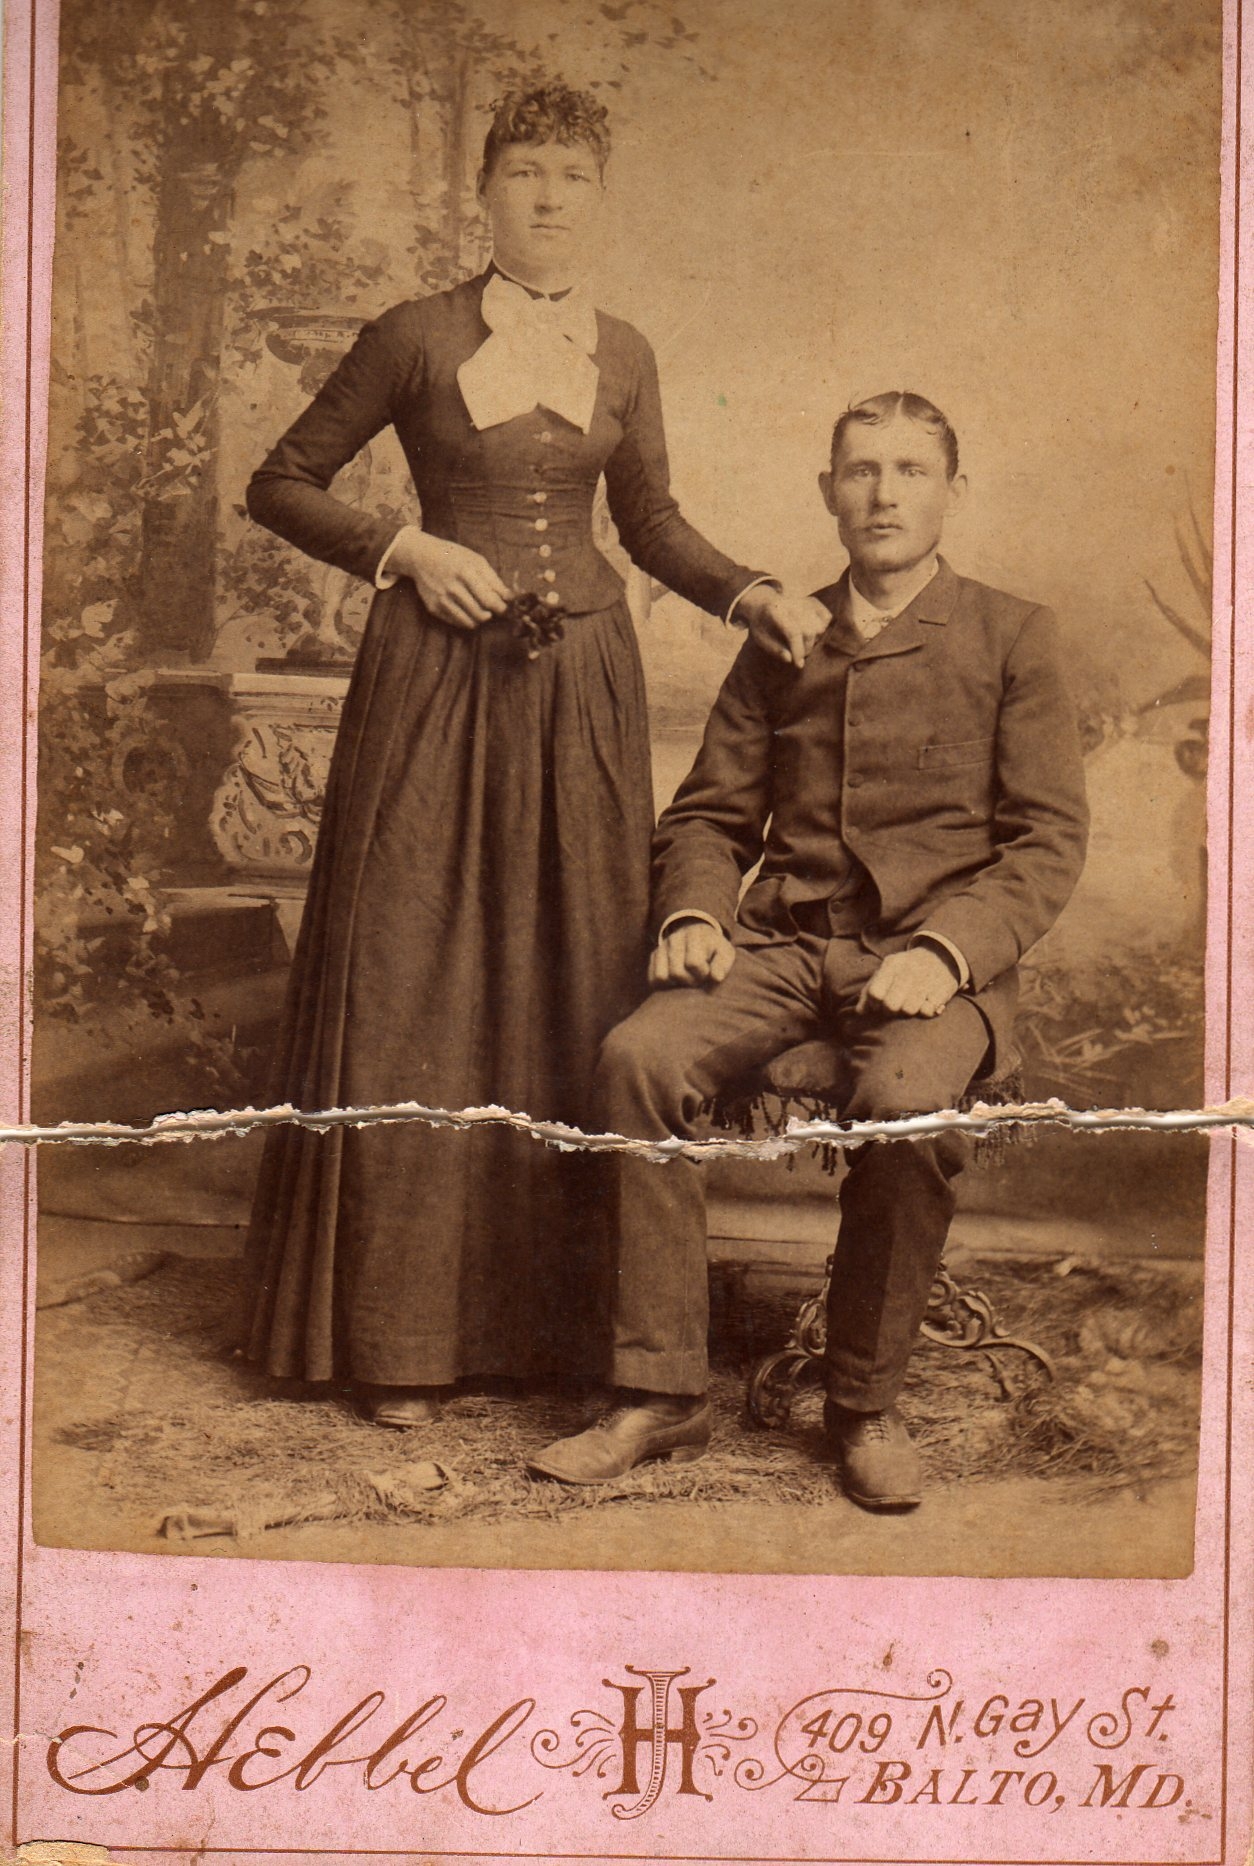 William & Ida (Carr) Wilkinson, 1899 MD